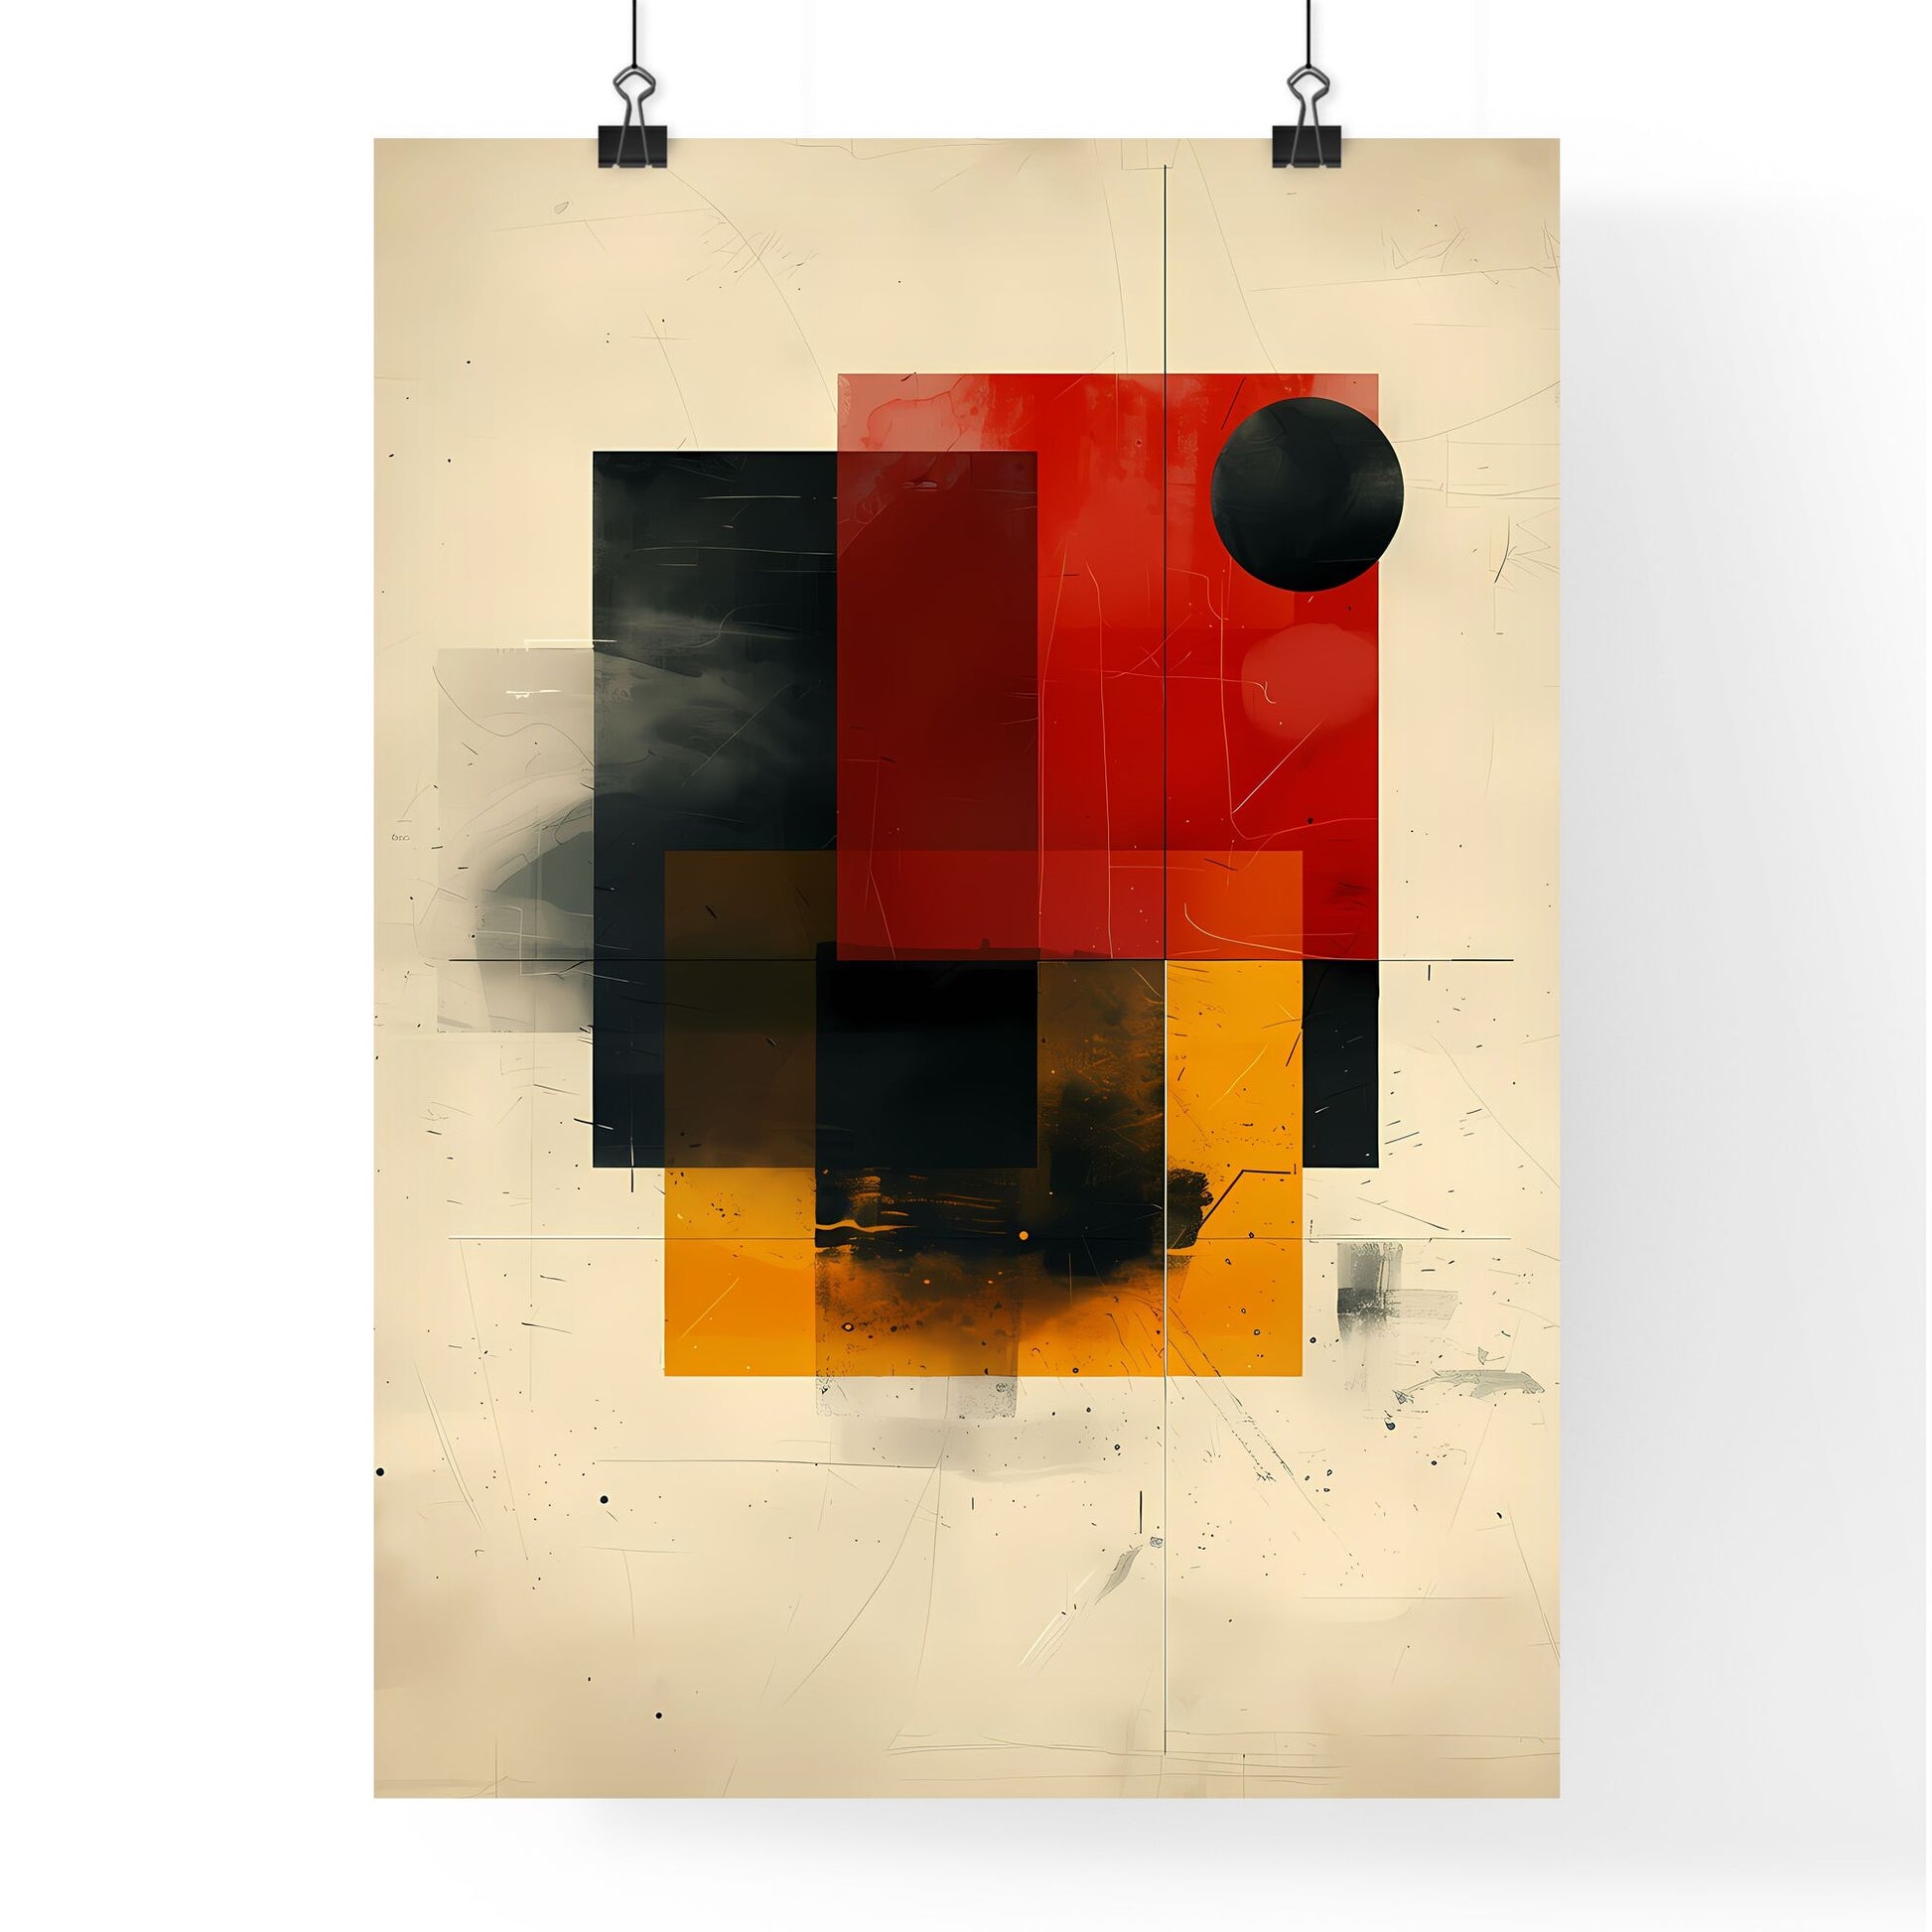 Bauhaus Art Geometric Abstract Painting Red Black Yellow Squares Black Circle Default Title